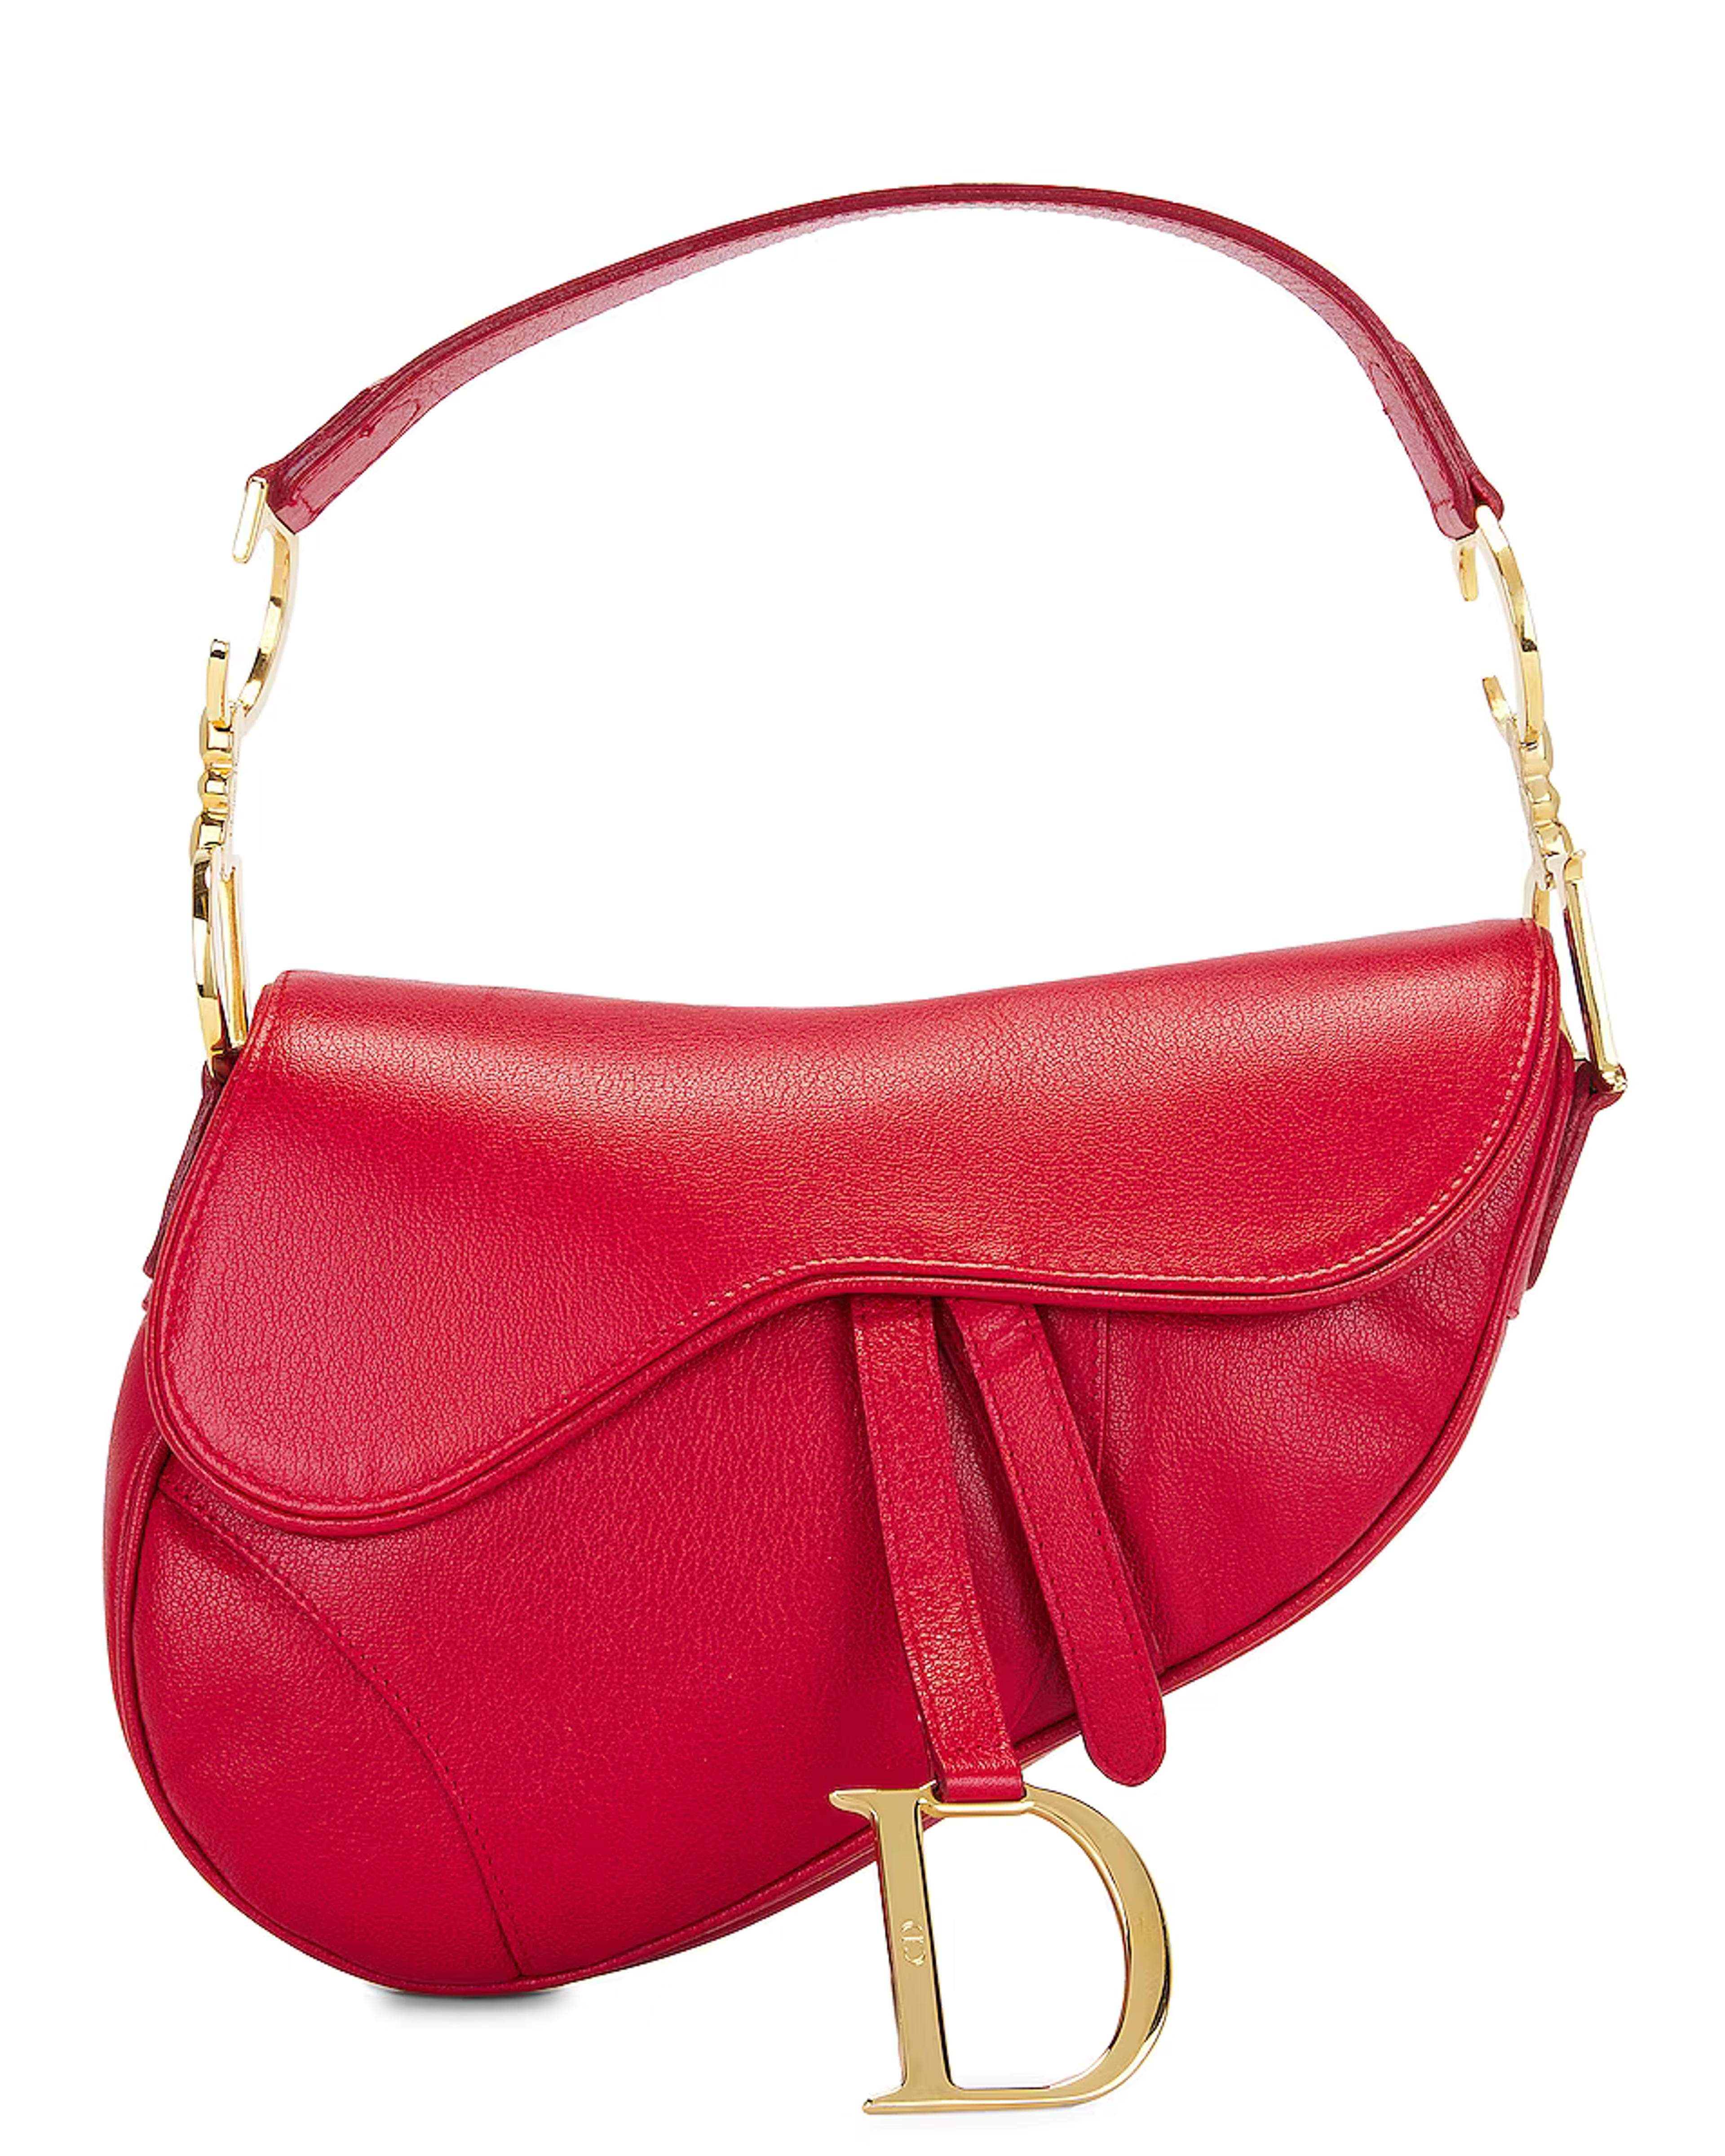 FWRD Renew Dior Saddle Bag in Red | FWRD